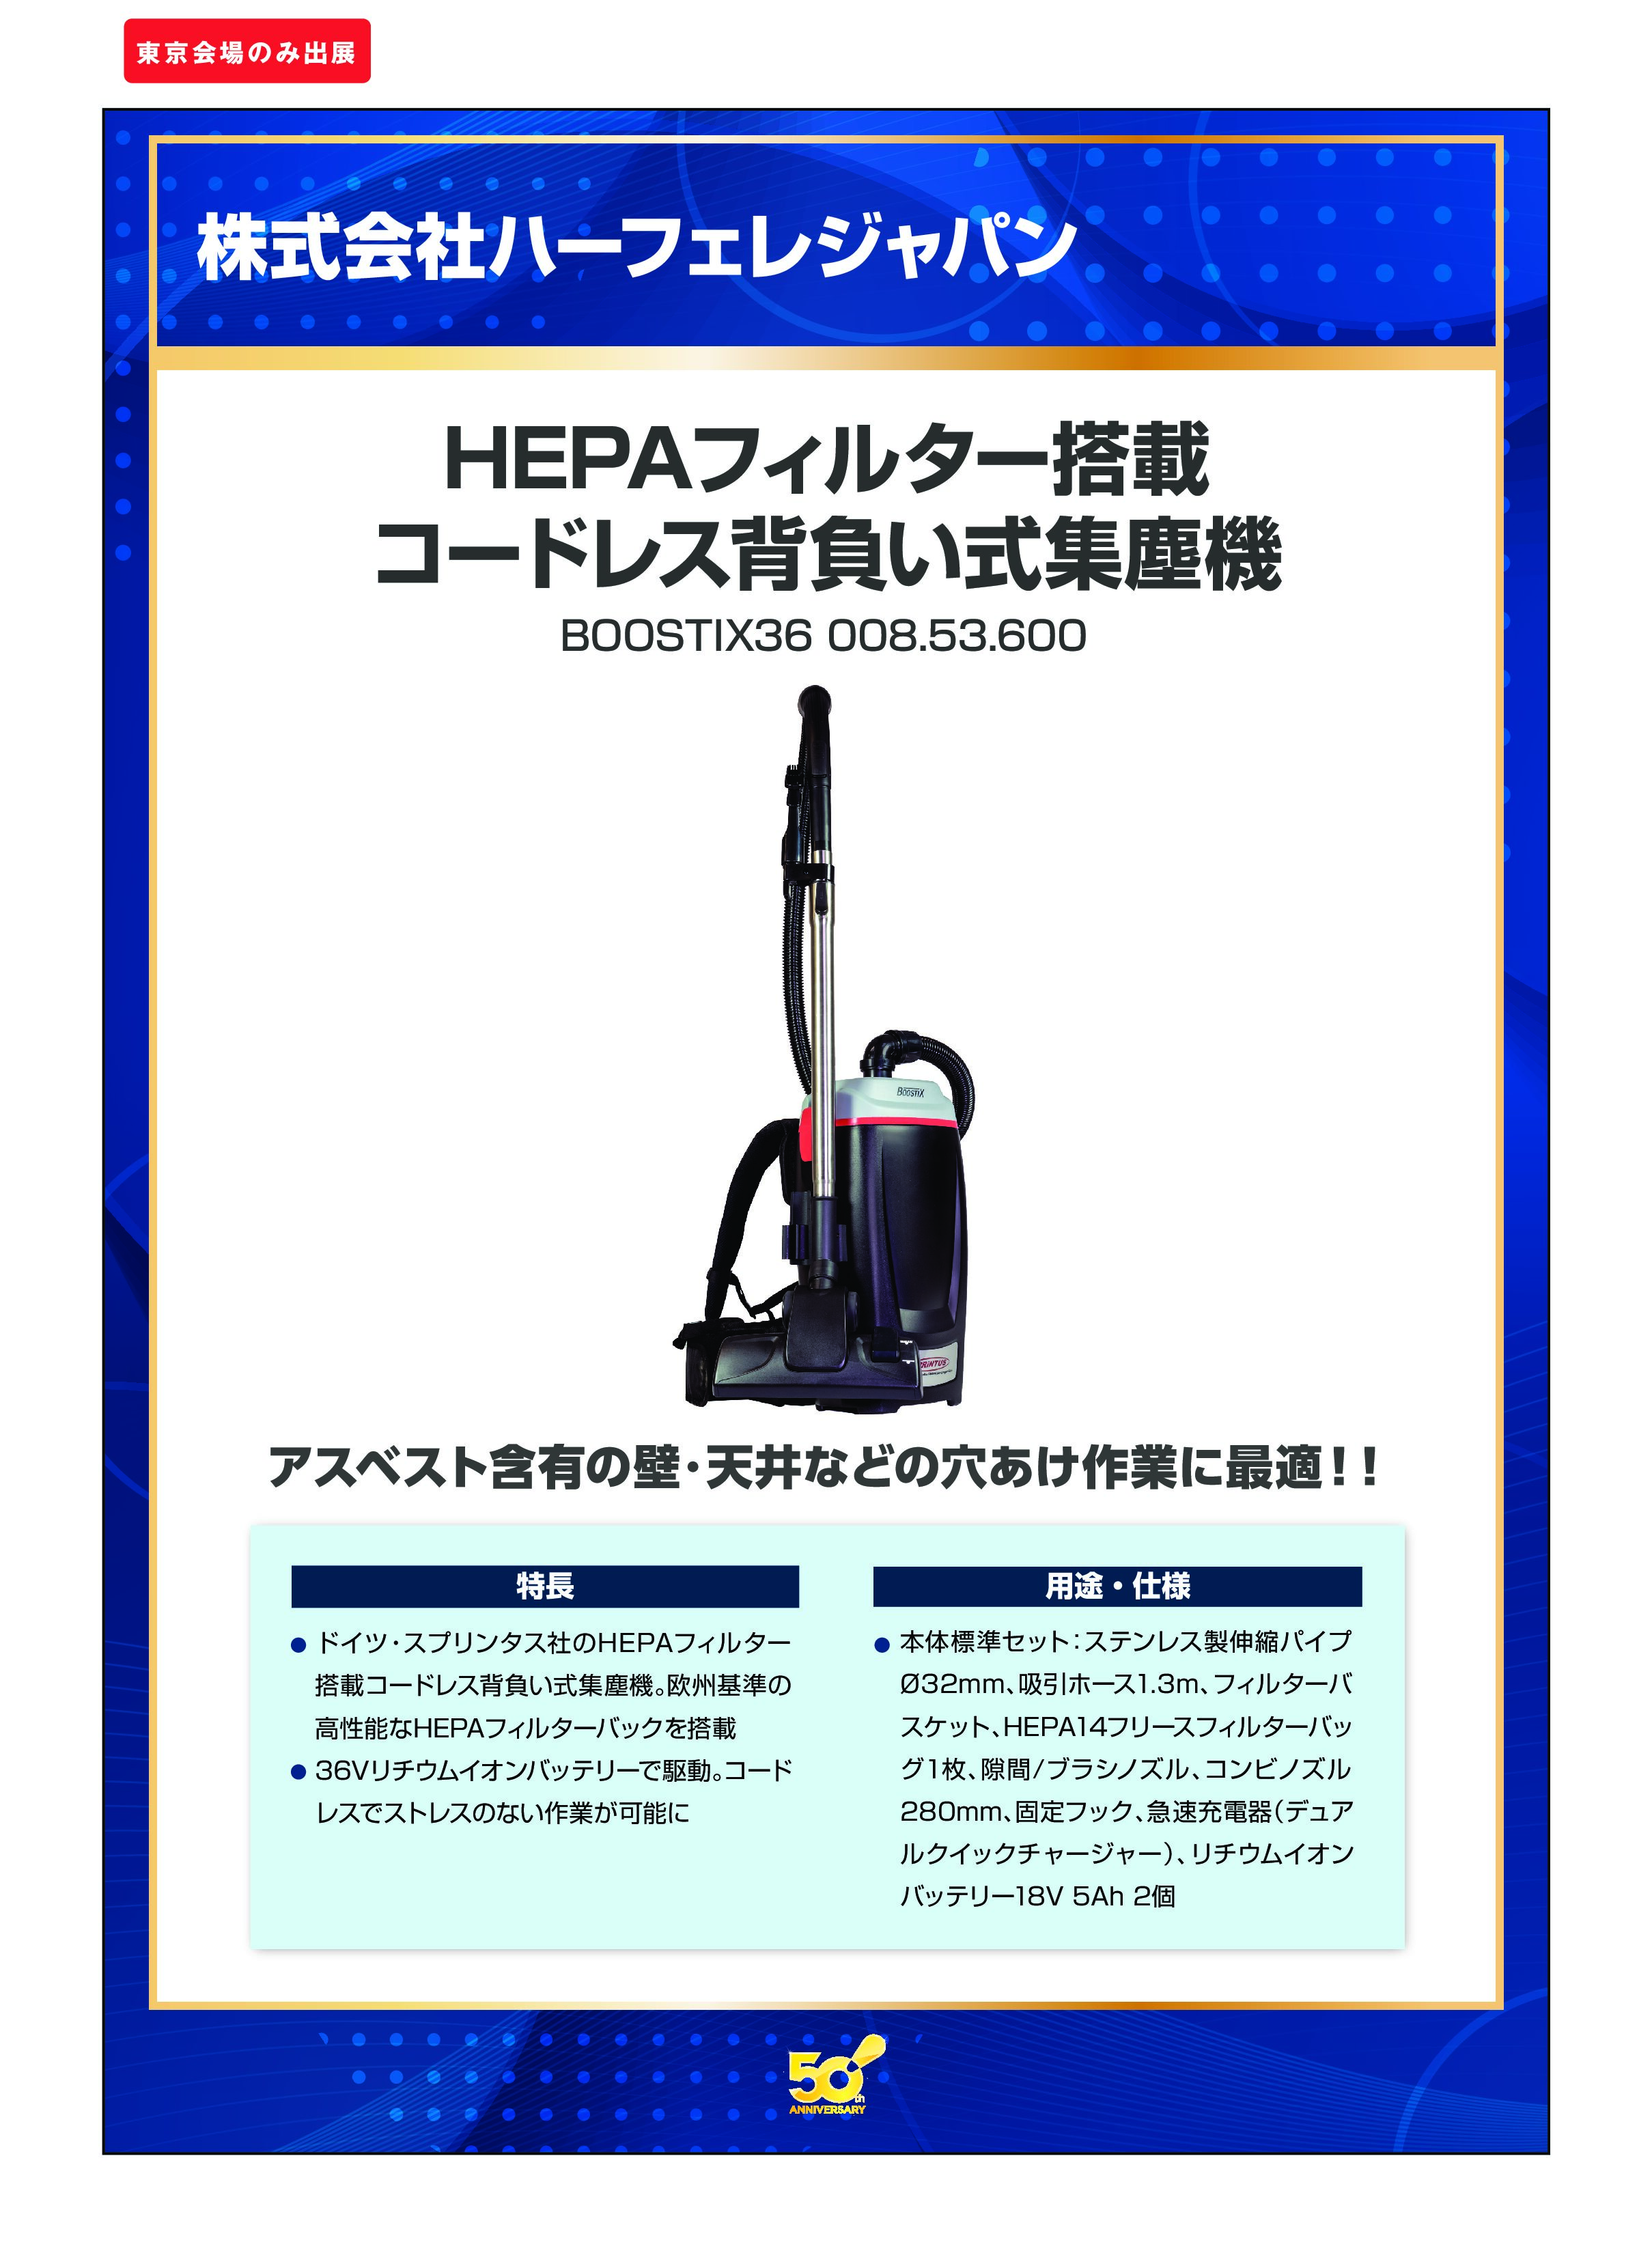 「HEPAフィルター搭載コードレス背負い式集塵機」株式会社ハーフェレジャパンの画像